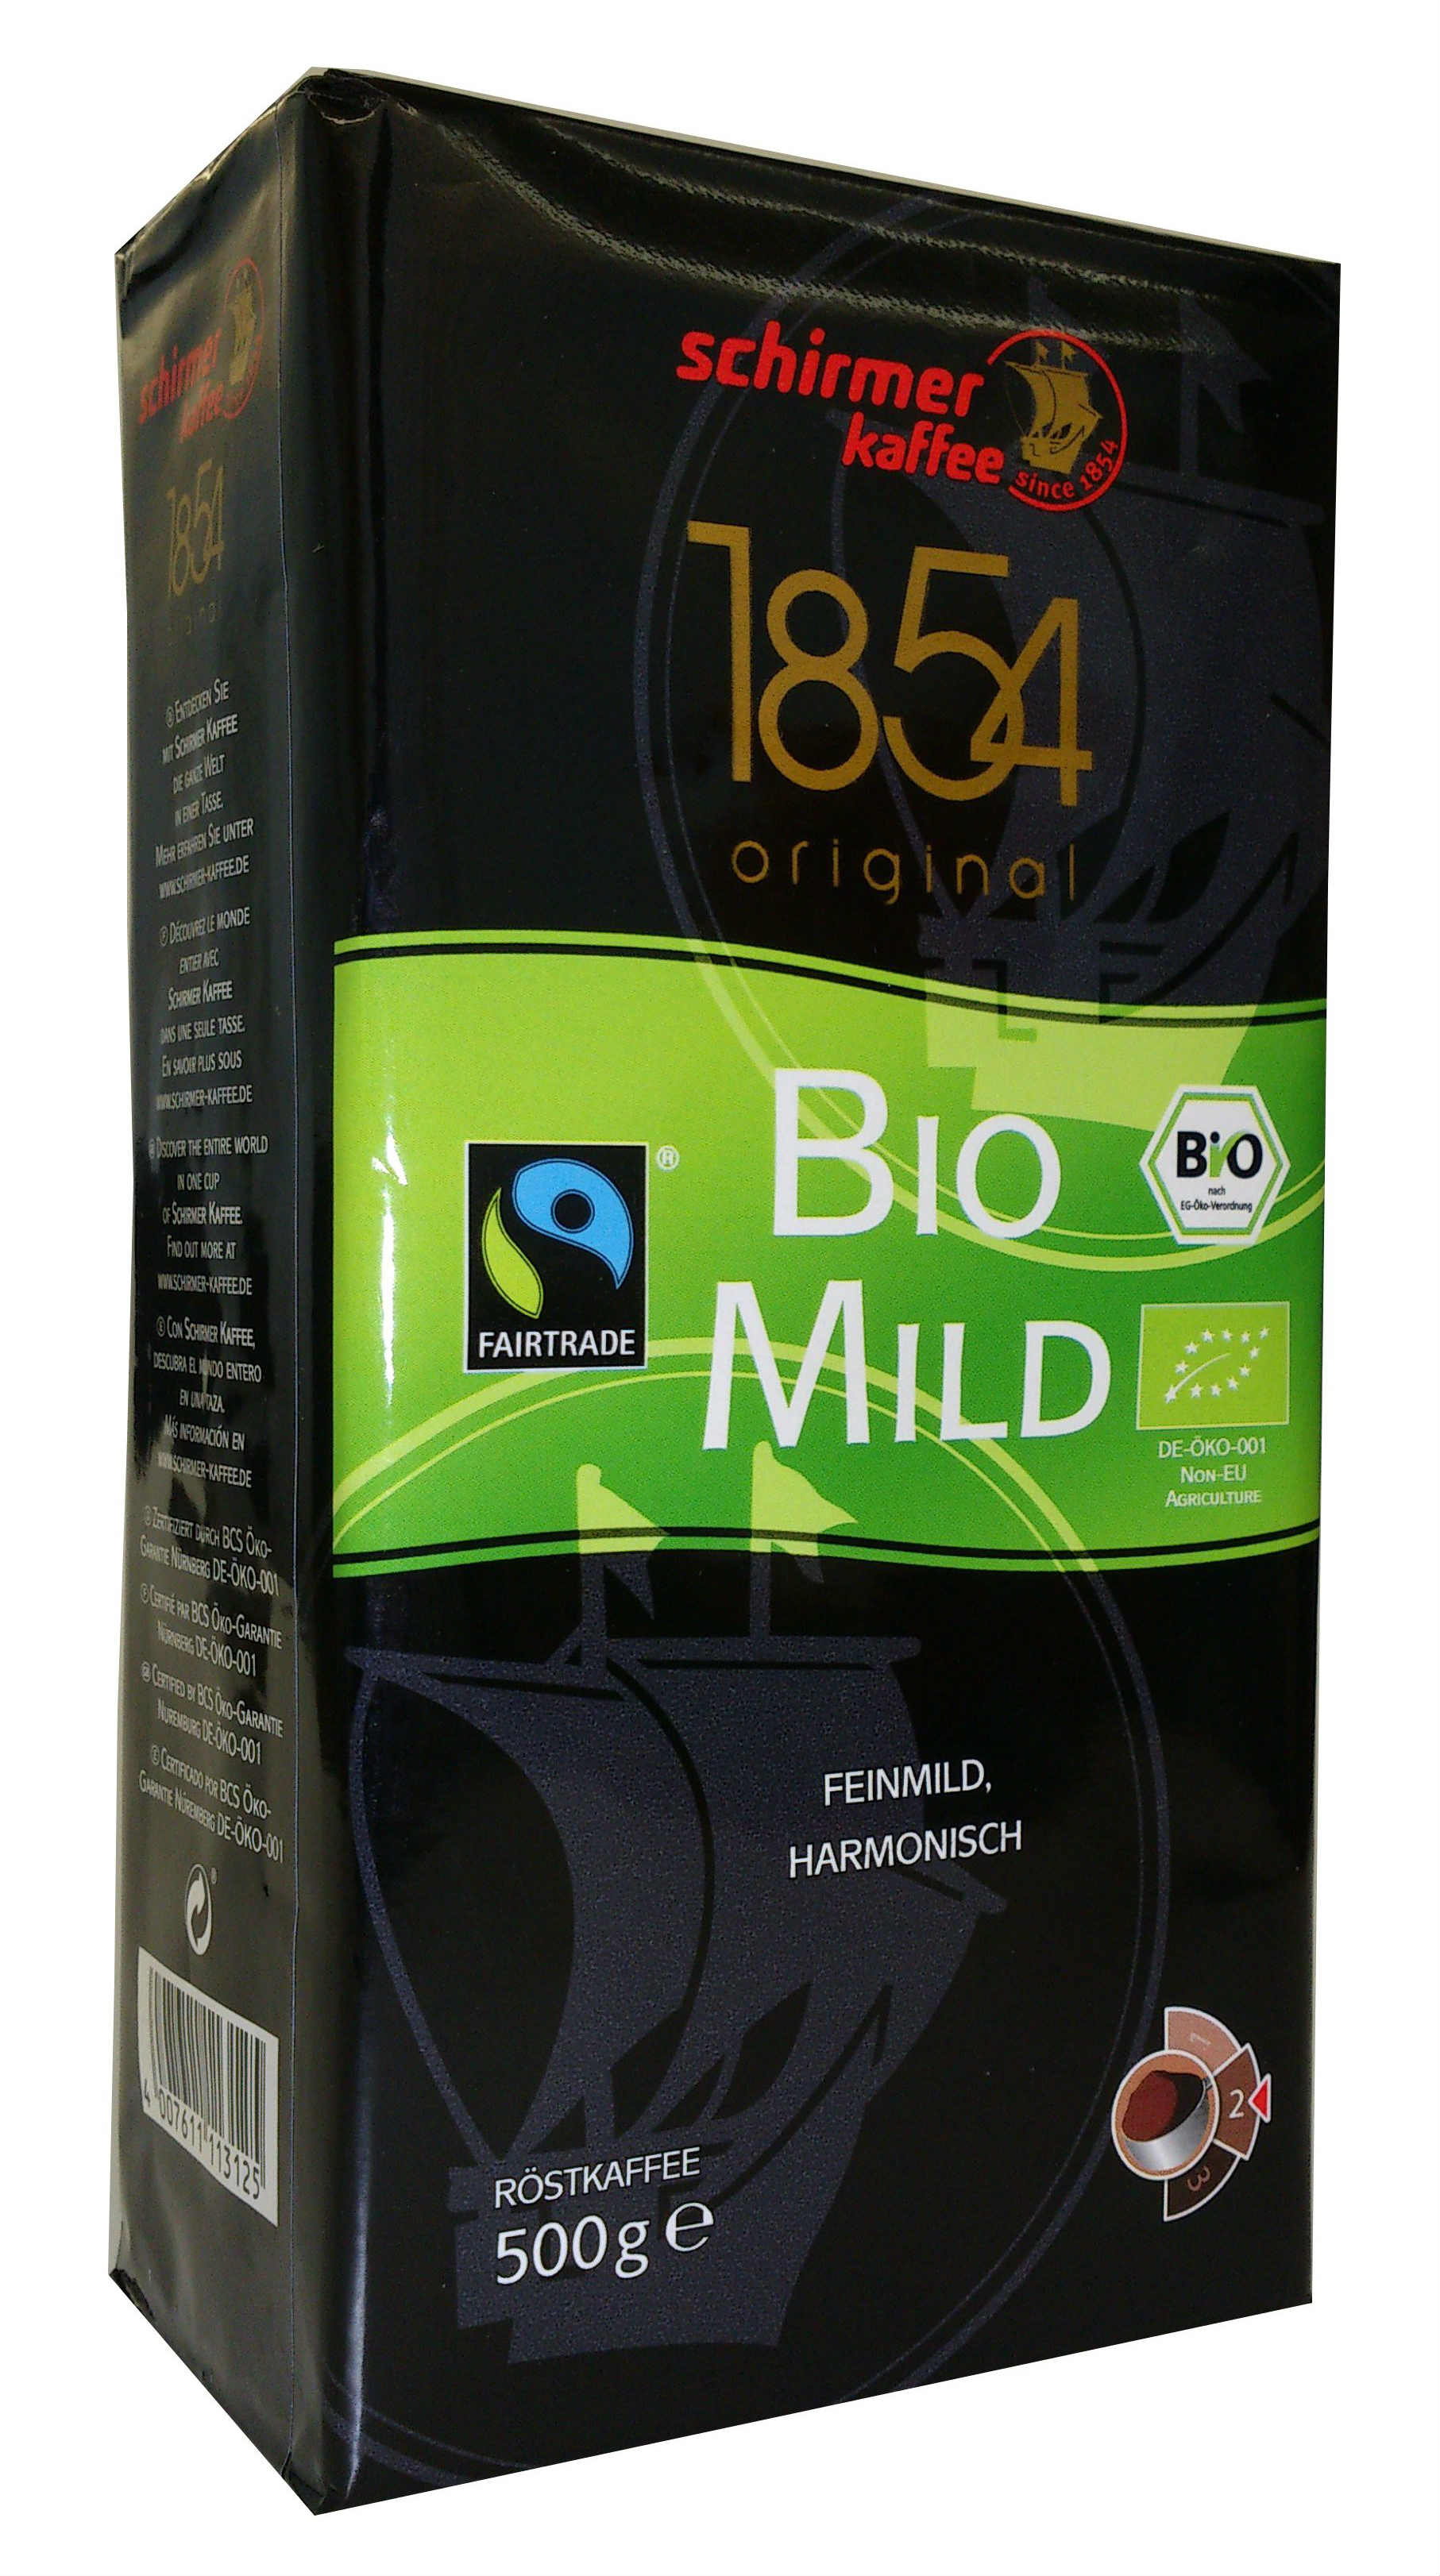 Schirmer Kaffee Bio Fairtrade Mild 500 г, молотый